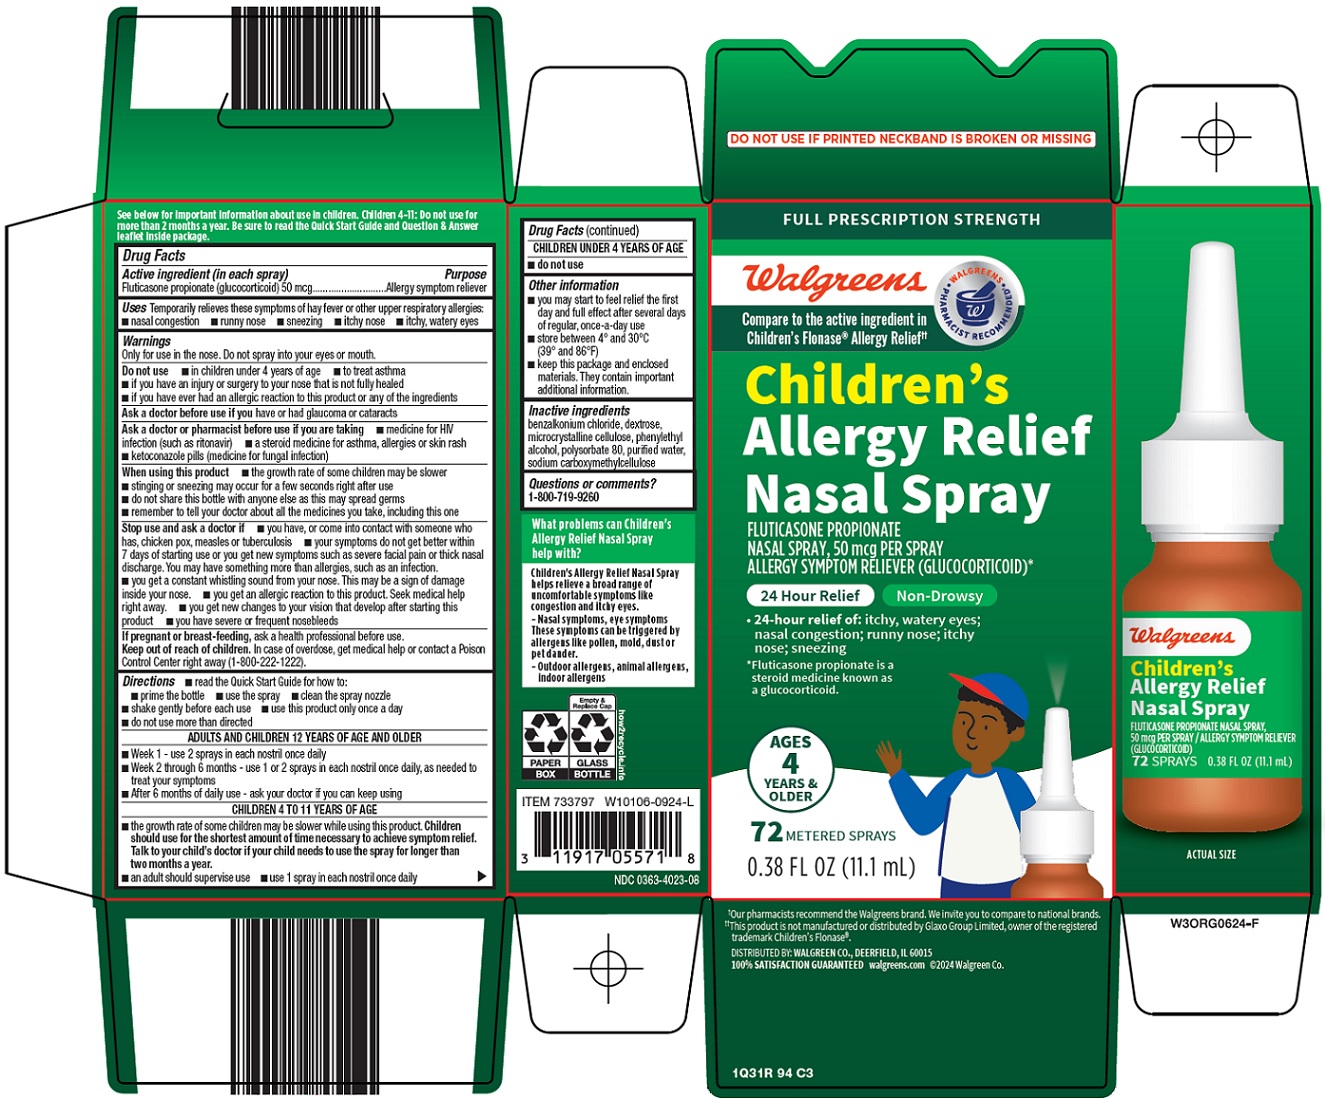 Childrens Allergy Relief Nasal Spray